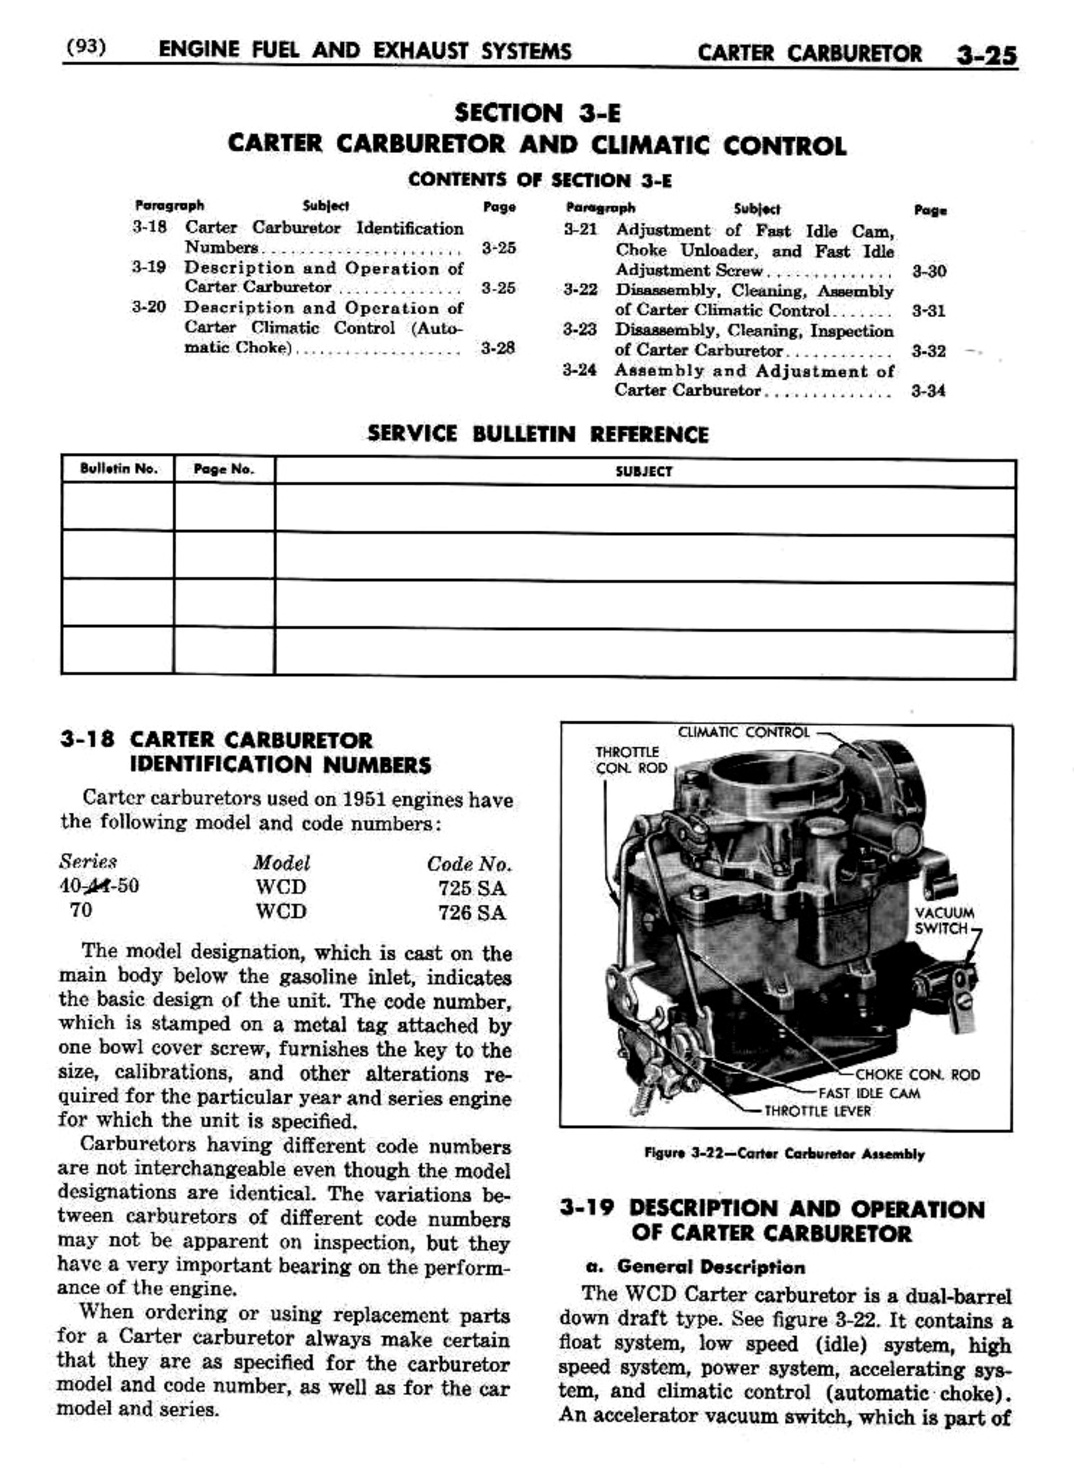 n_04 1951 Buick Shop Manual - Engine Fuel & Exhaust-025-025.jpg